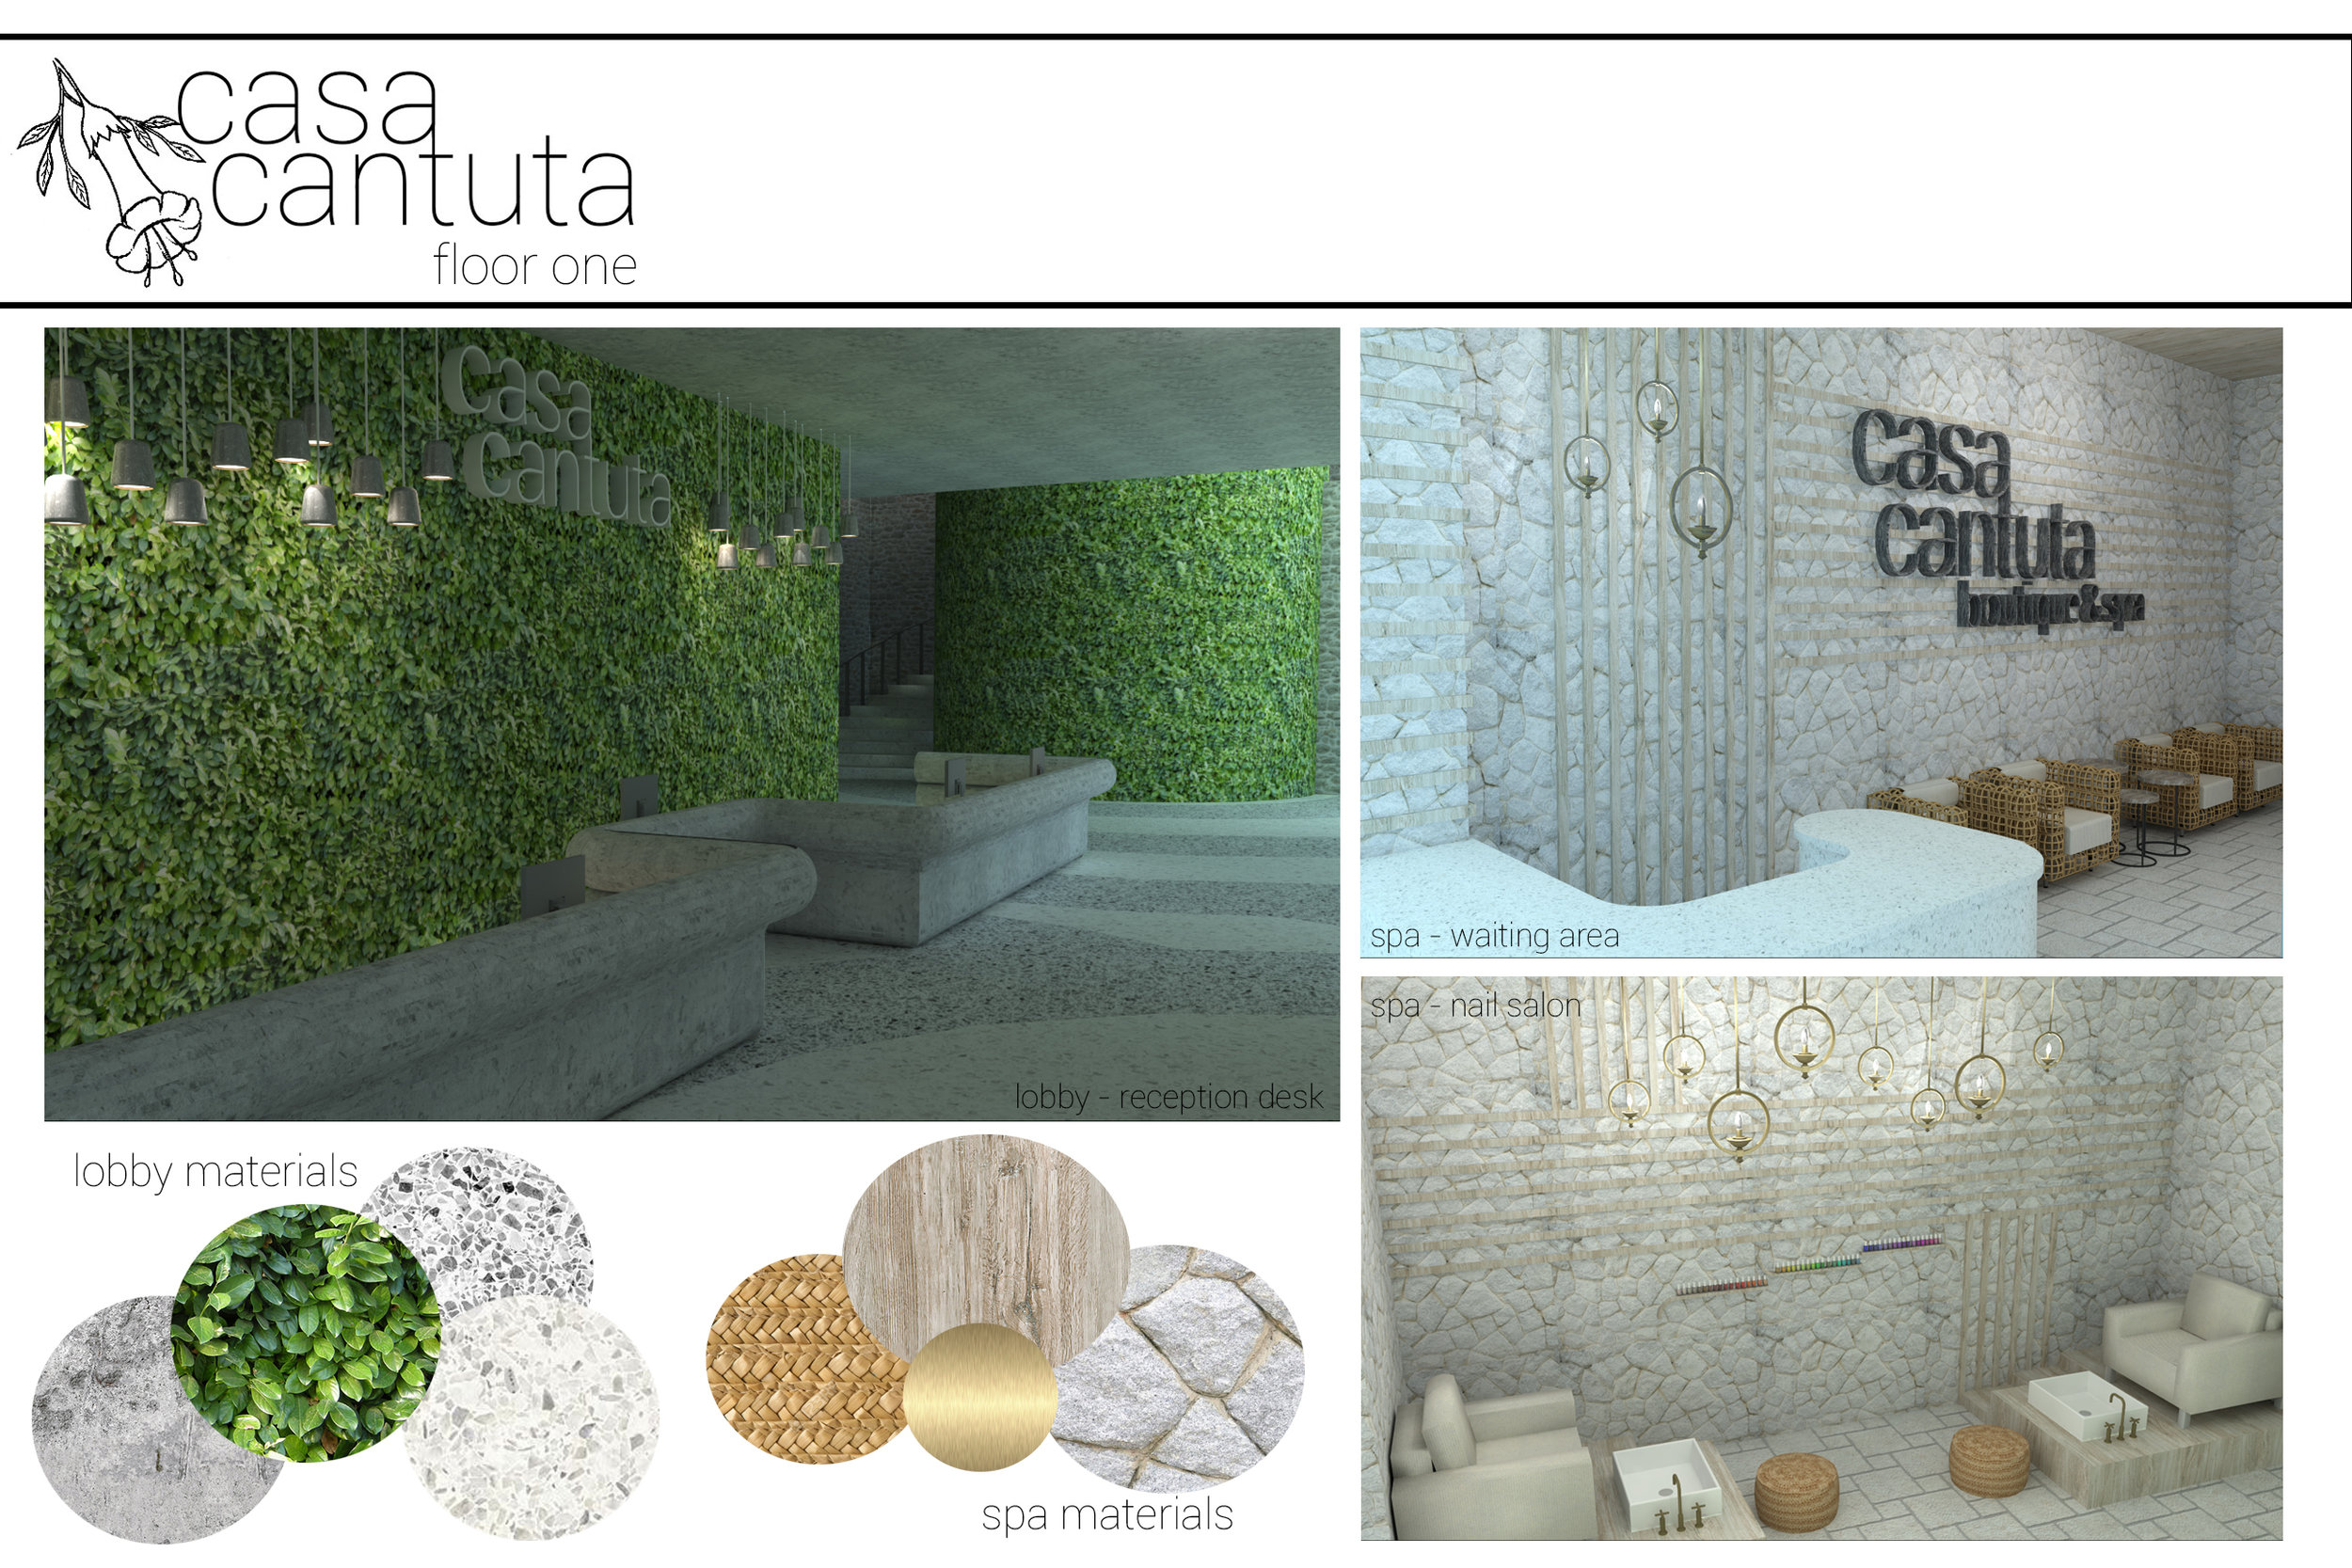 Casa Cantuta Hotel Project Catt Cropper Interior Design